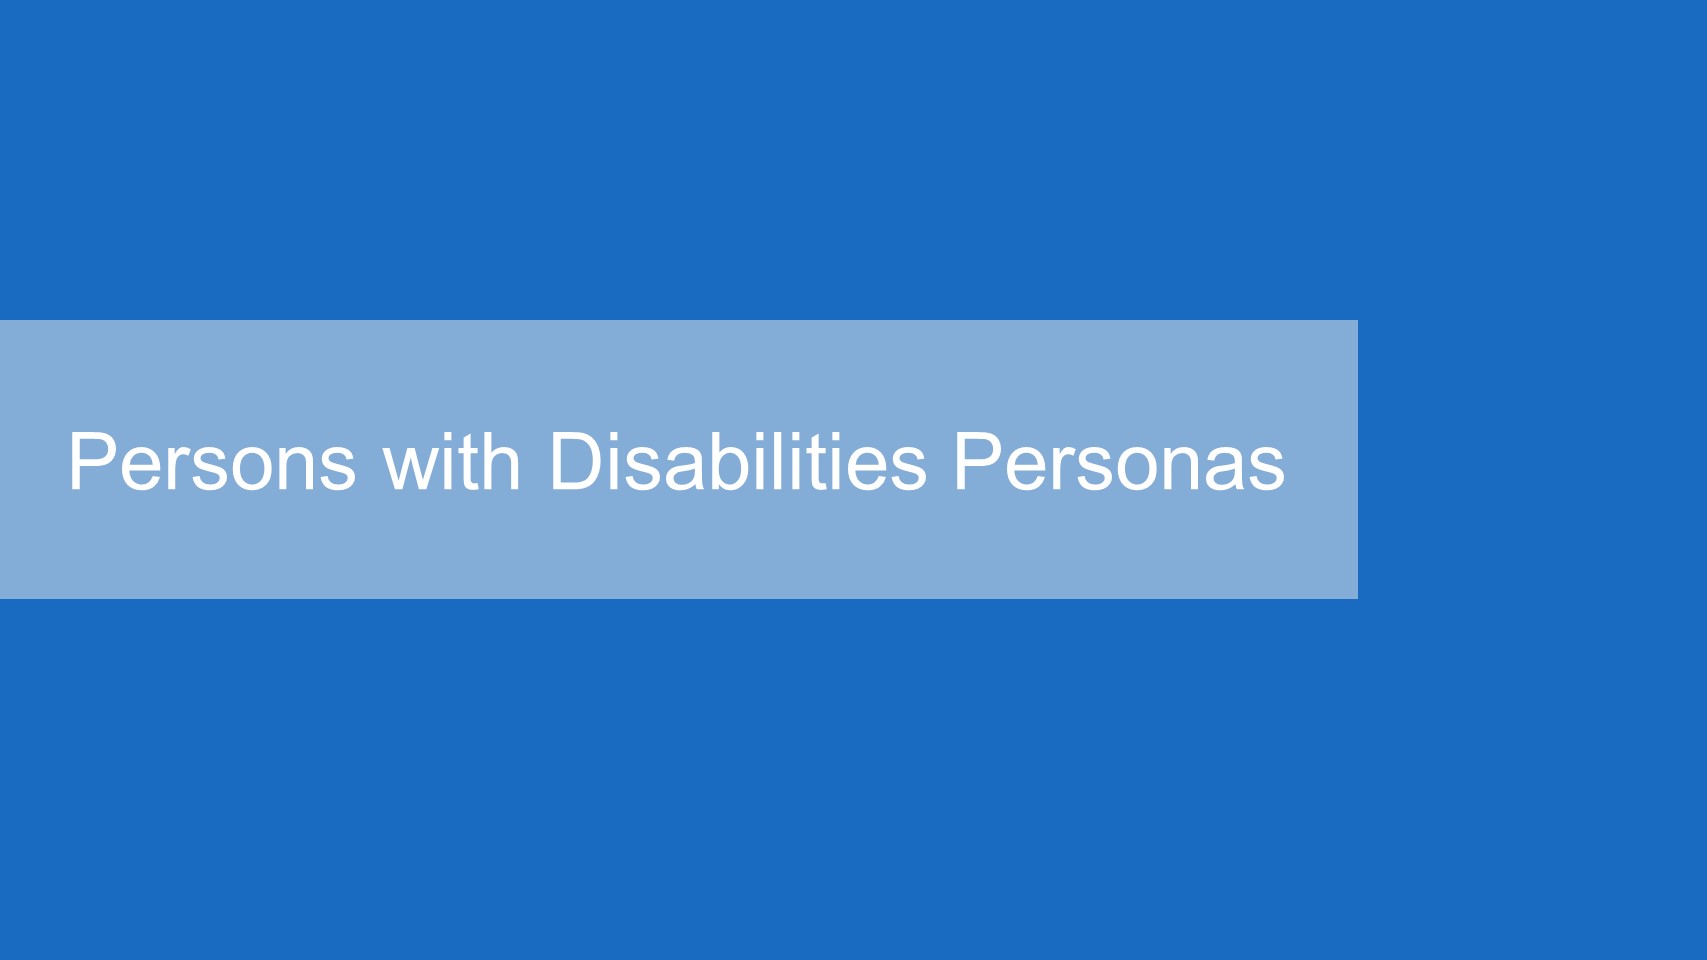 IMPORTED: __media_images_blog_2016_dec_hnhc_personas_slider_under_65_w_disabilities_slide1.jpg